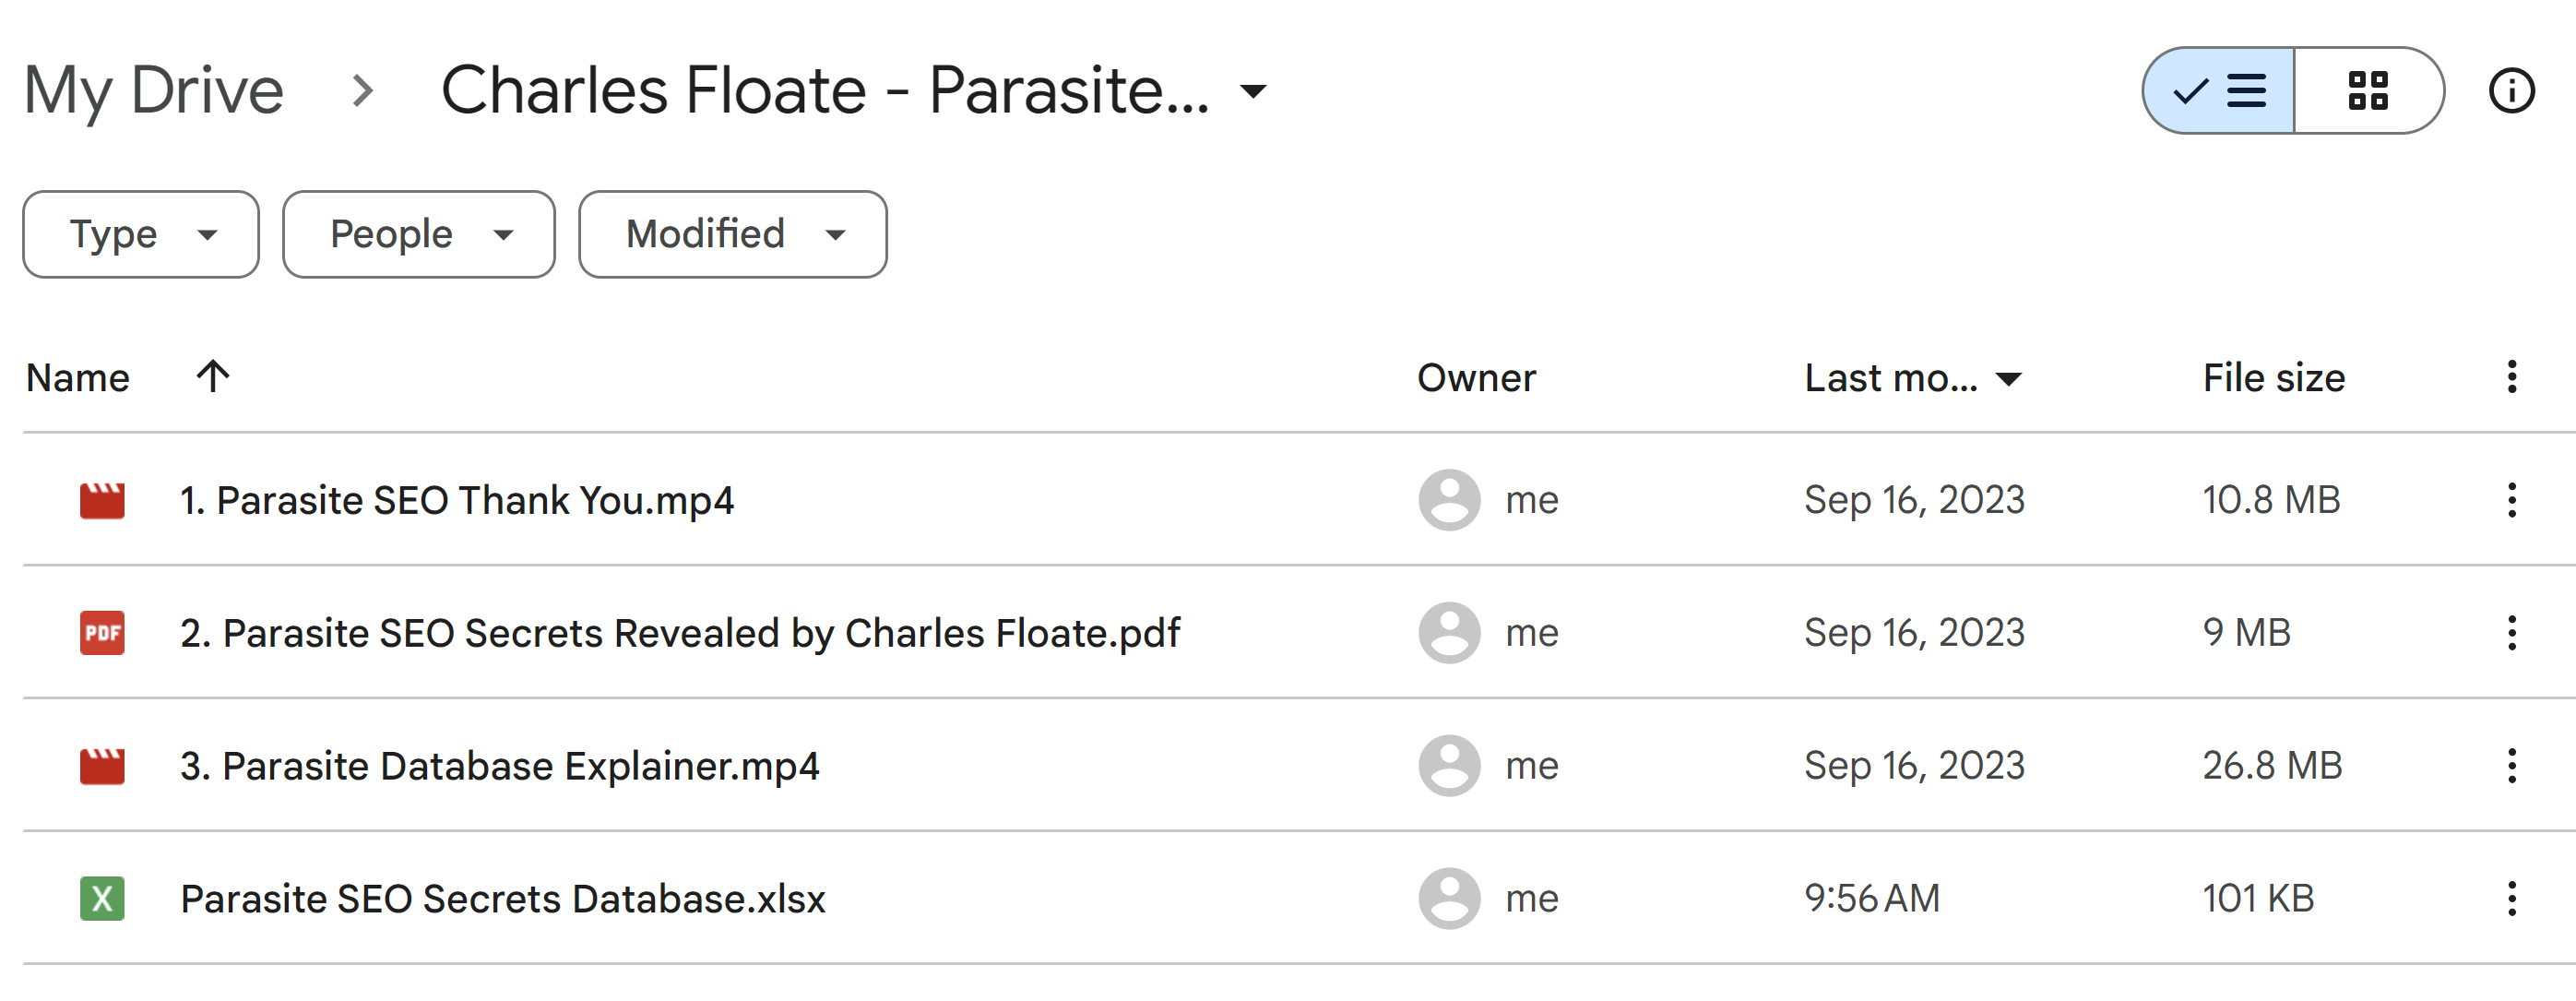 Charles Floate Parasite Seo Secrets 2023